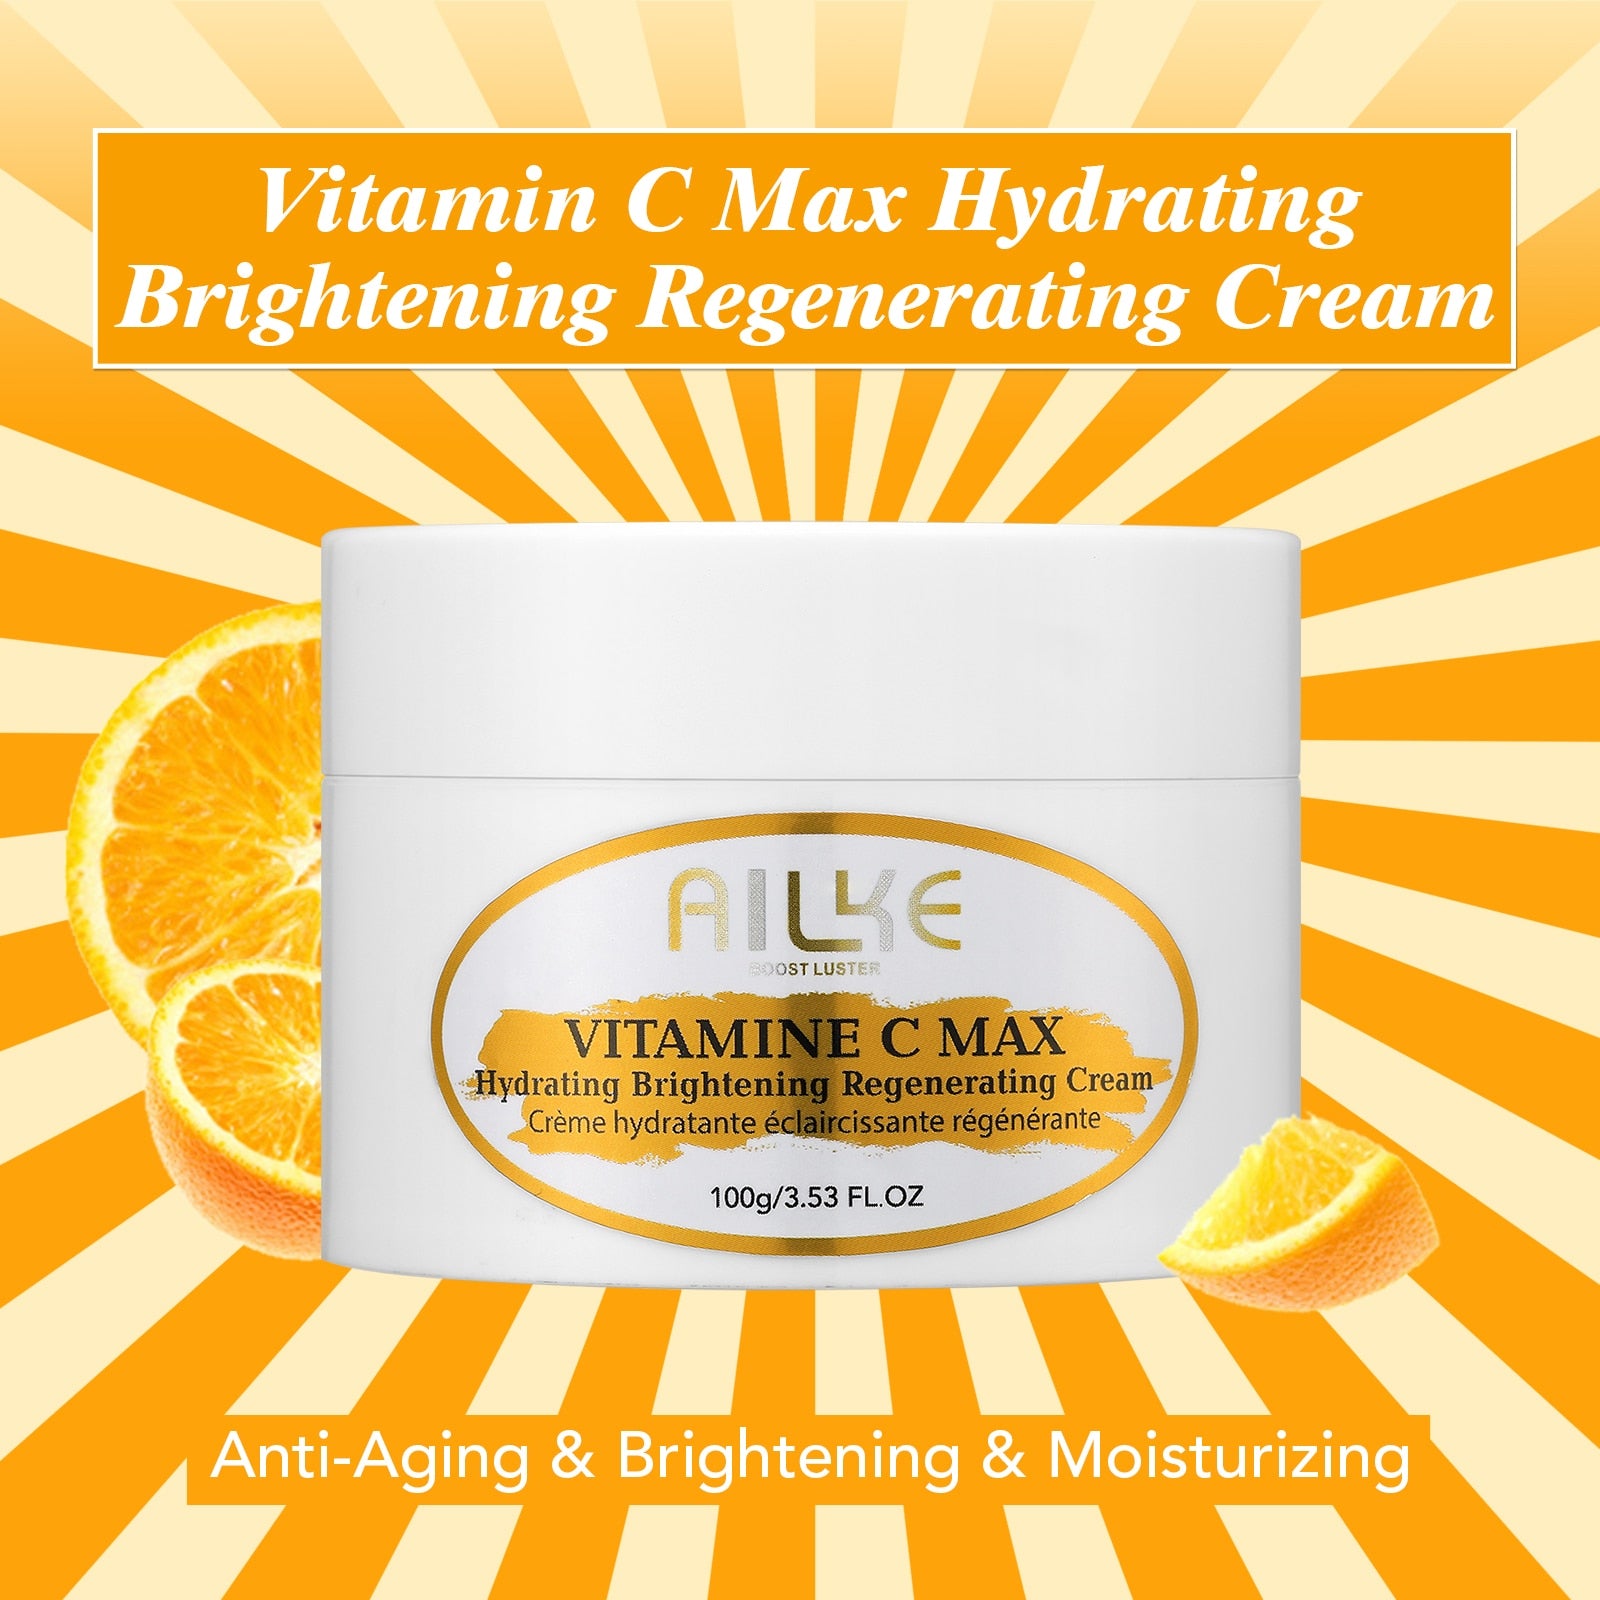 Vitamin C Max Hydrating Brightening Regenerating Cream